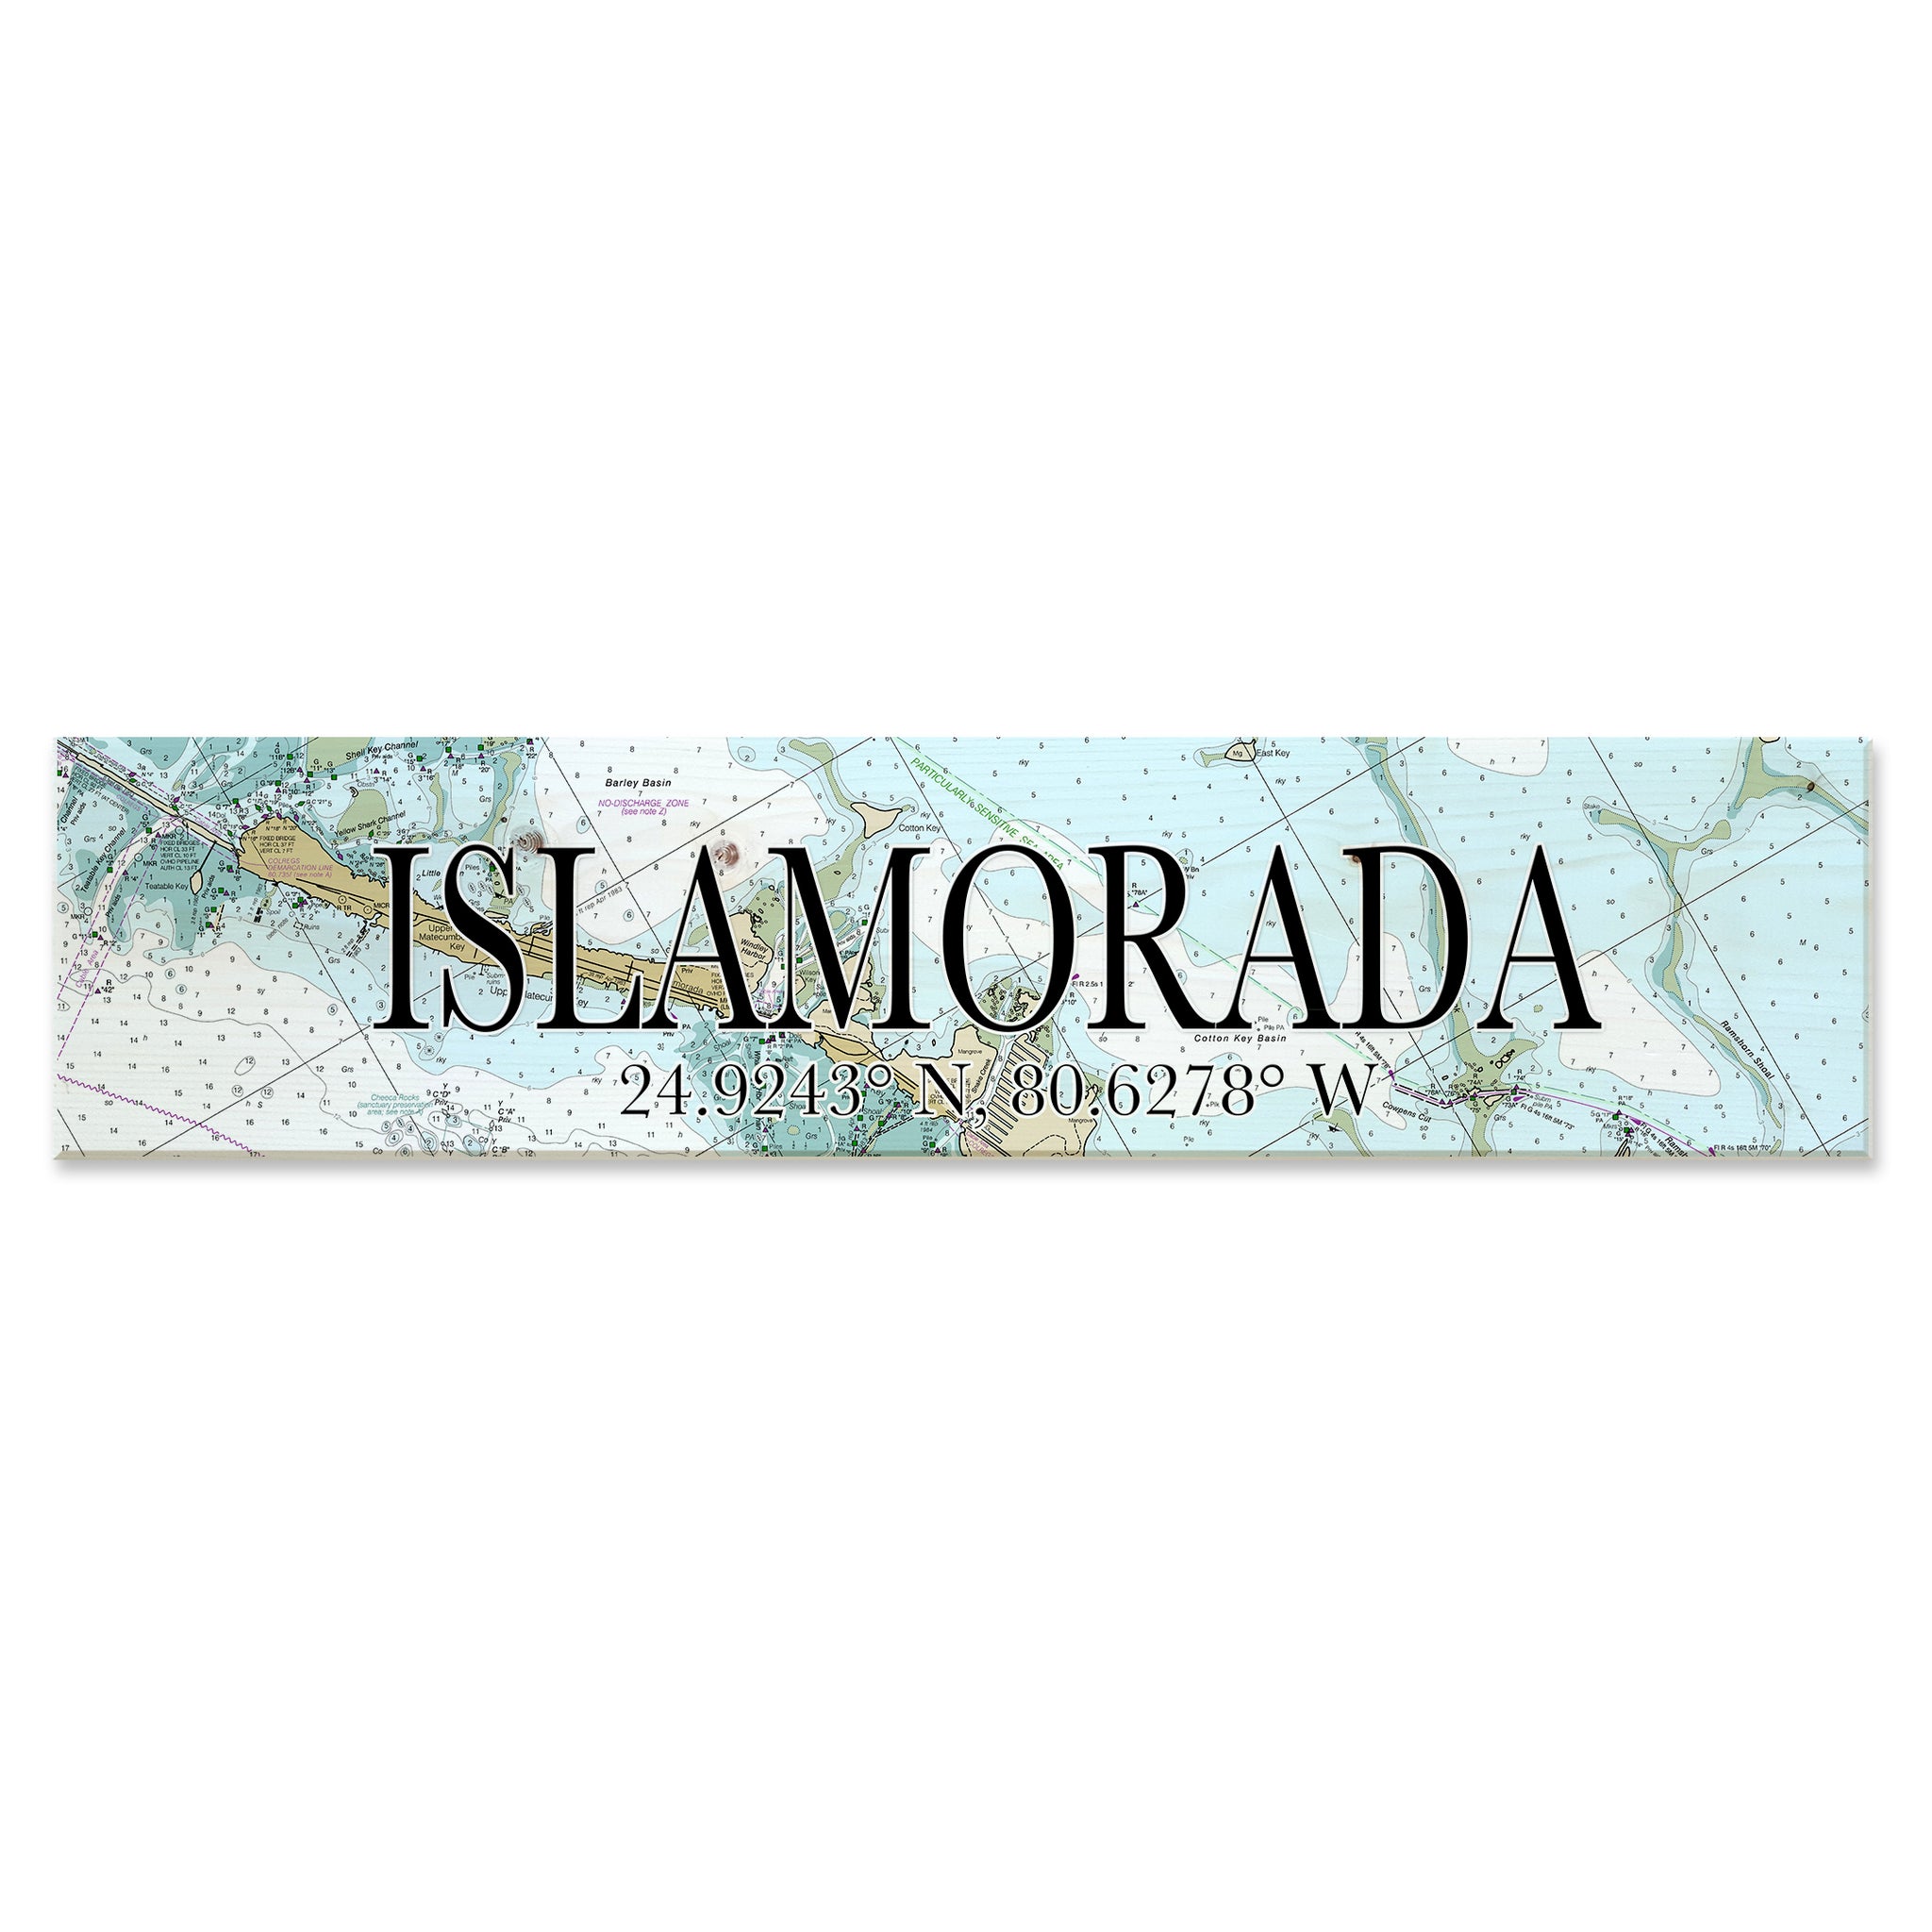 Islamorada, FL Coordinate Sign